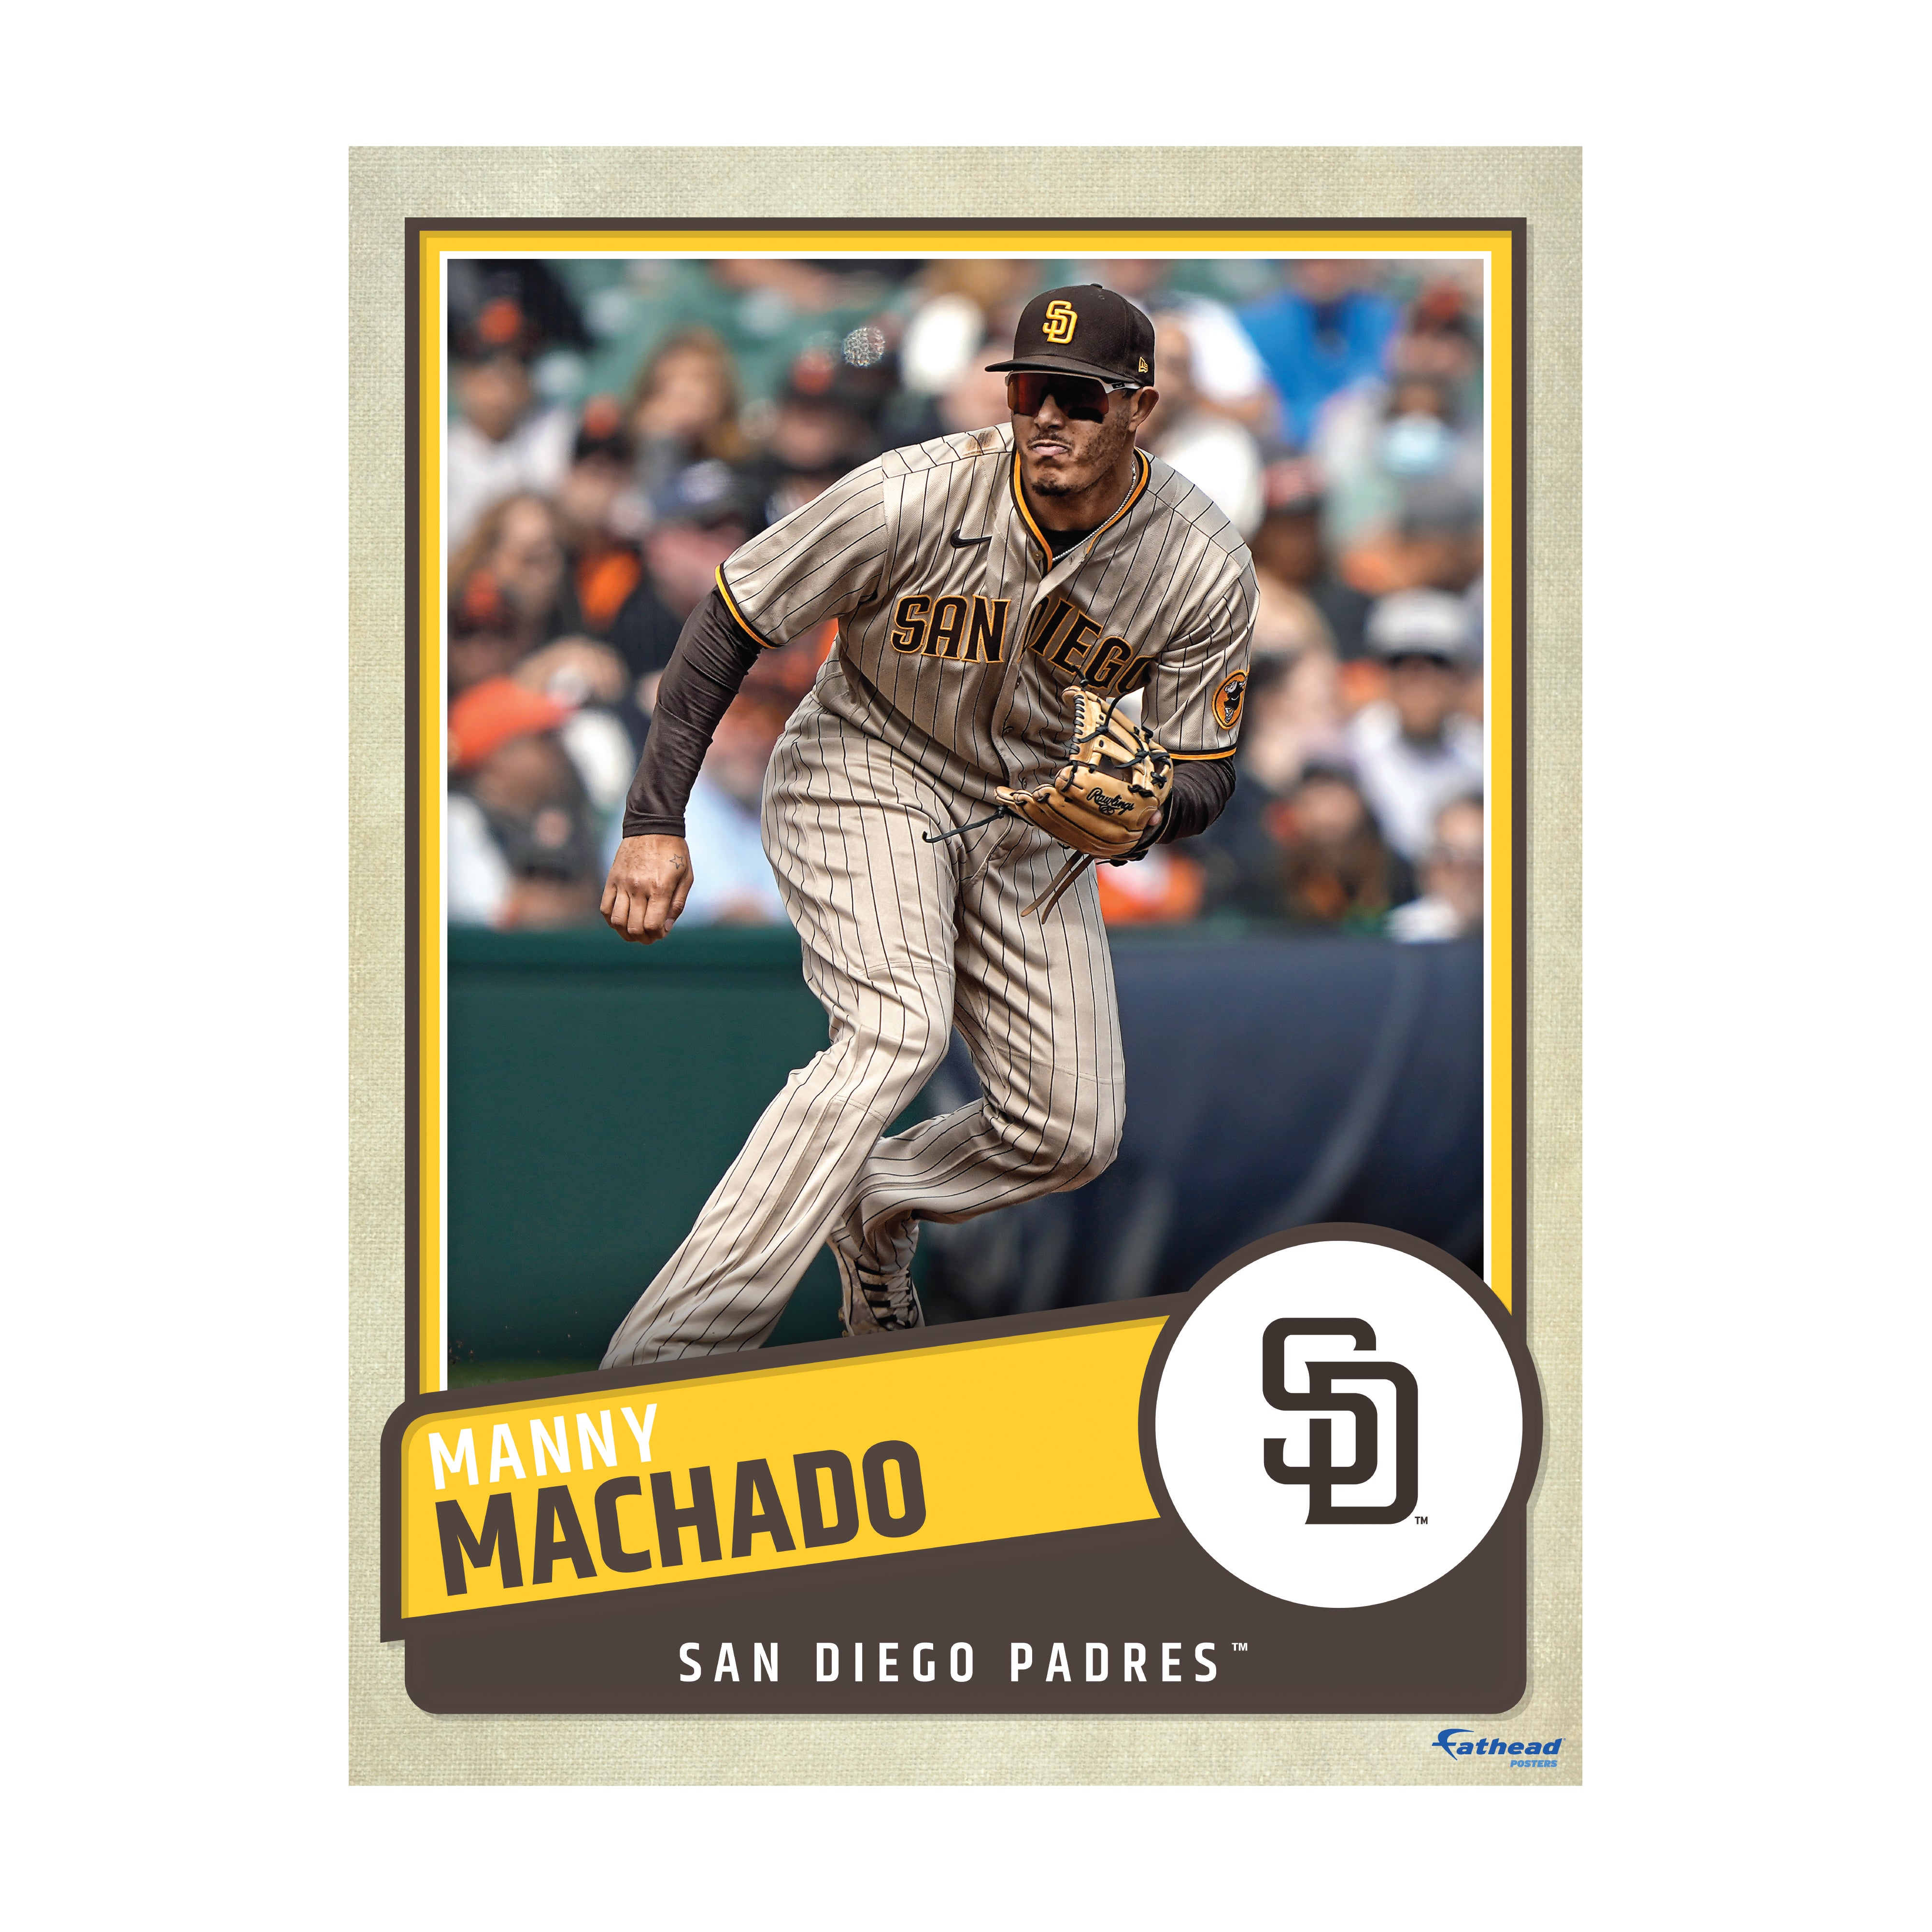 MLB Mannymachado Manny Machado Manny Machado San Diego Padres  Sandiegopadres Manuel Arturo Machado B Greeting Card